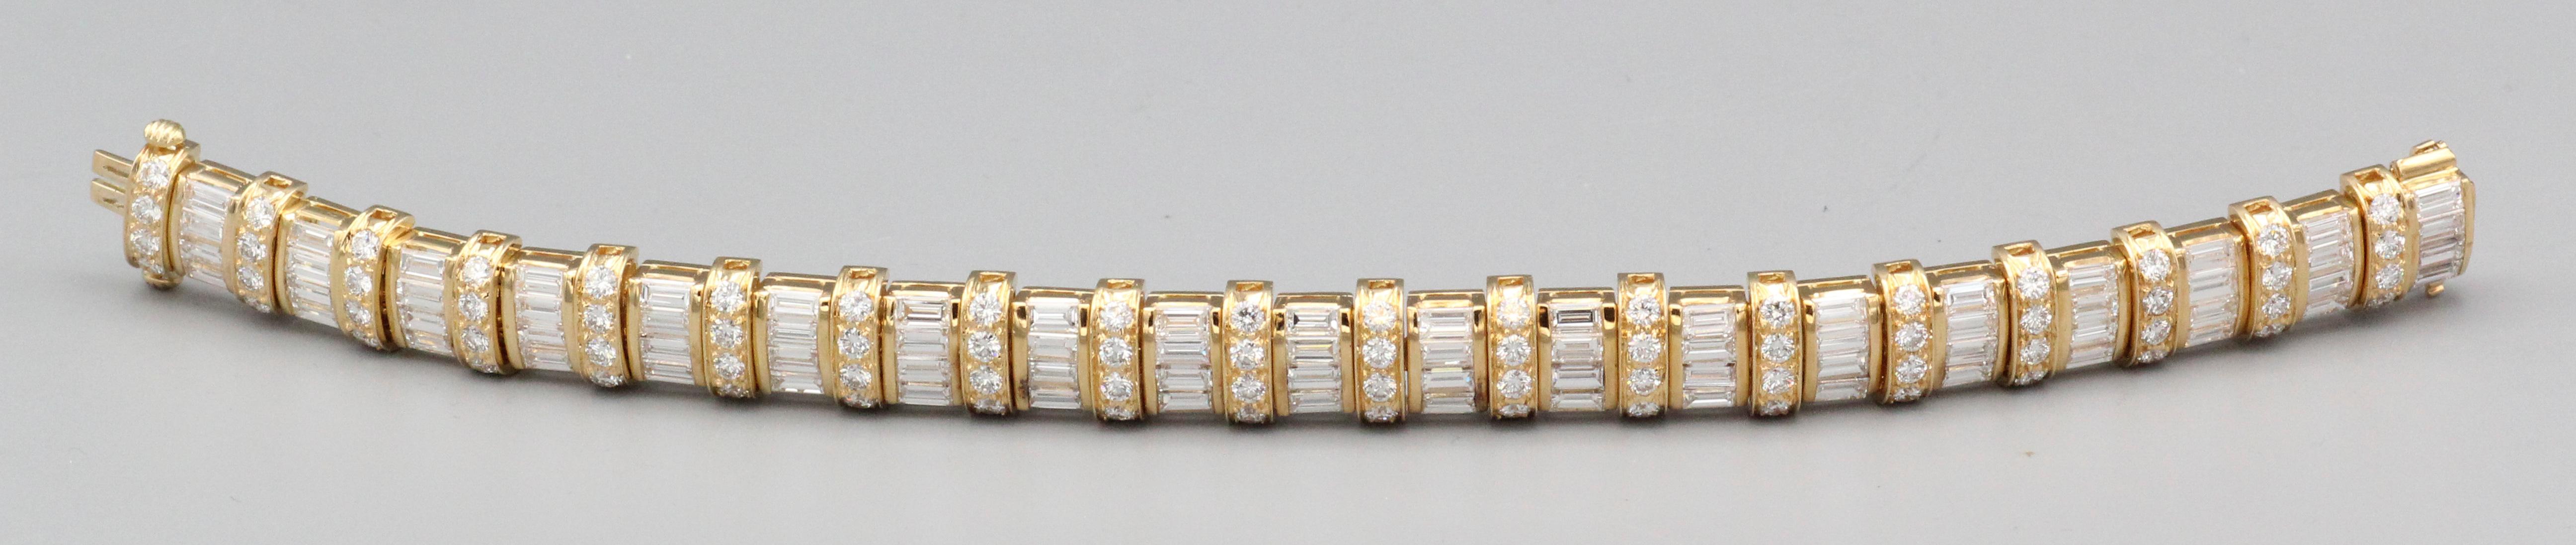 Oscar Heyman Bros. Baguette Brilliant Cut Diamond 18k Yellow Gold Bracelet In Good Condition For Sale In New York, NY